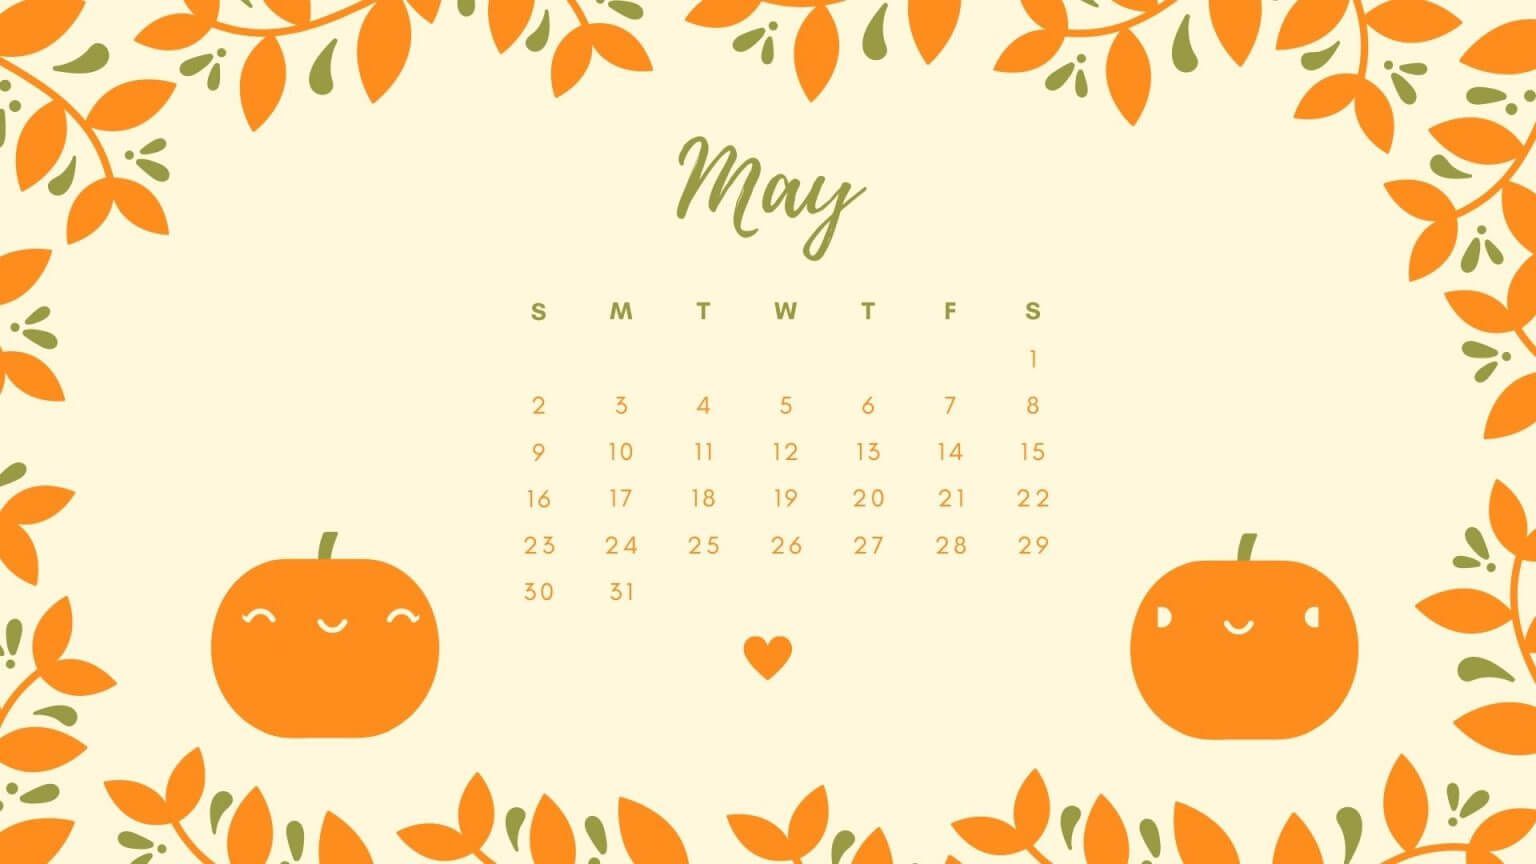 Cute May 2021 Calendar Floral Wallpaper Desk Image Free Download